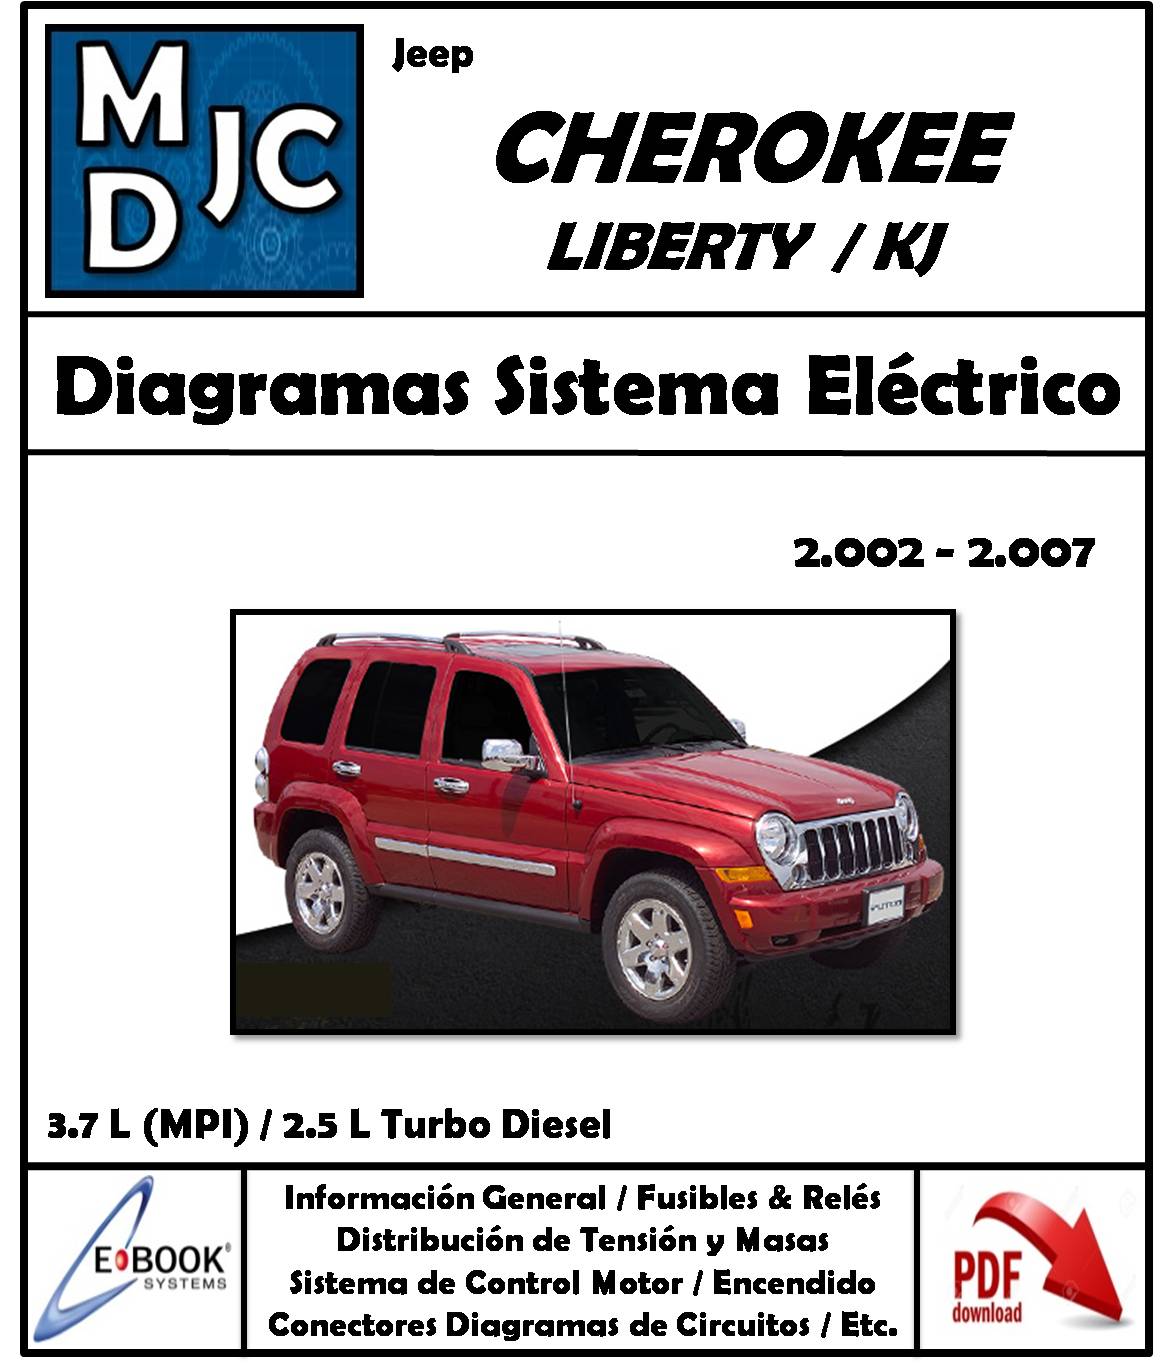 Diagramas de Cableado Sistema Eléctrico Jeep Cherokee Liberty KJ 2002 - 2007